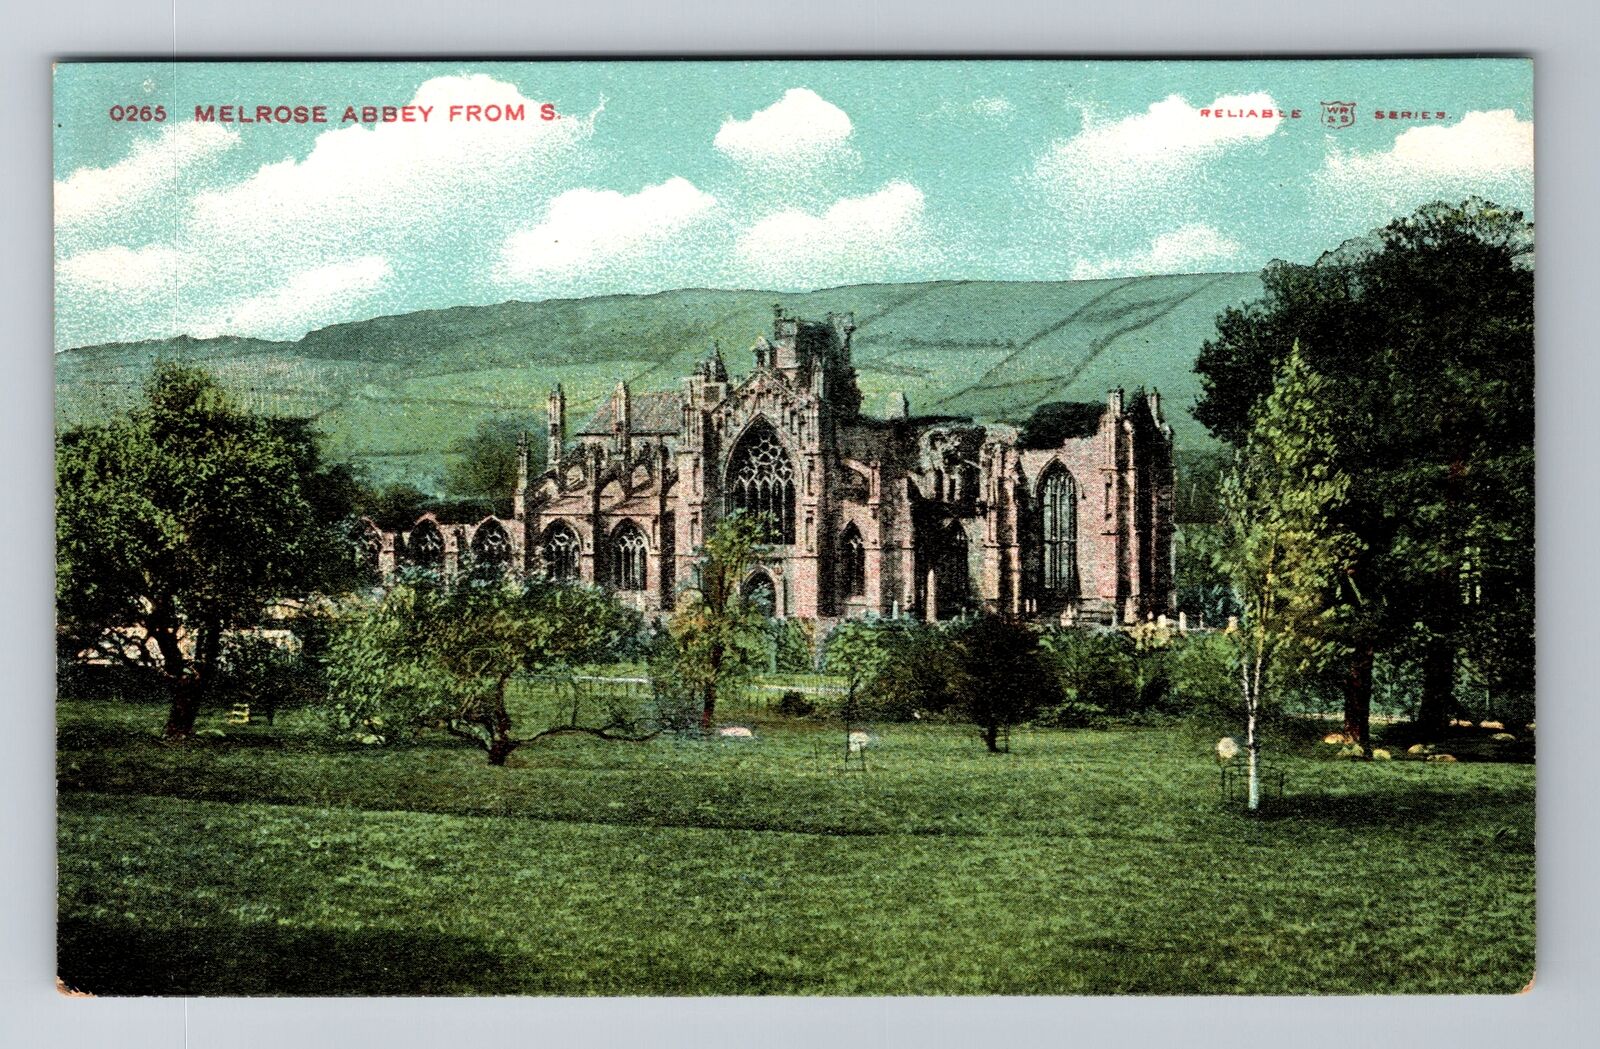 Melrose-Scotland, Melrose Abbey From S, Antique, Vintage Souvenir Postcard